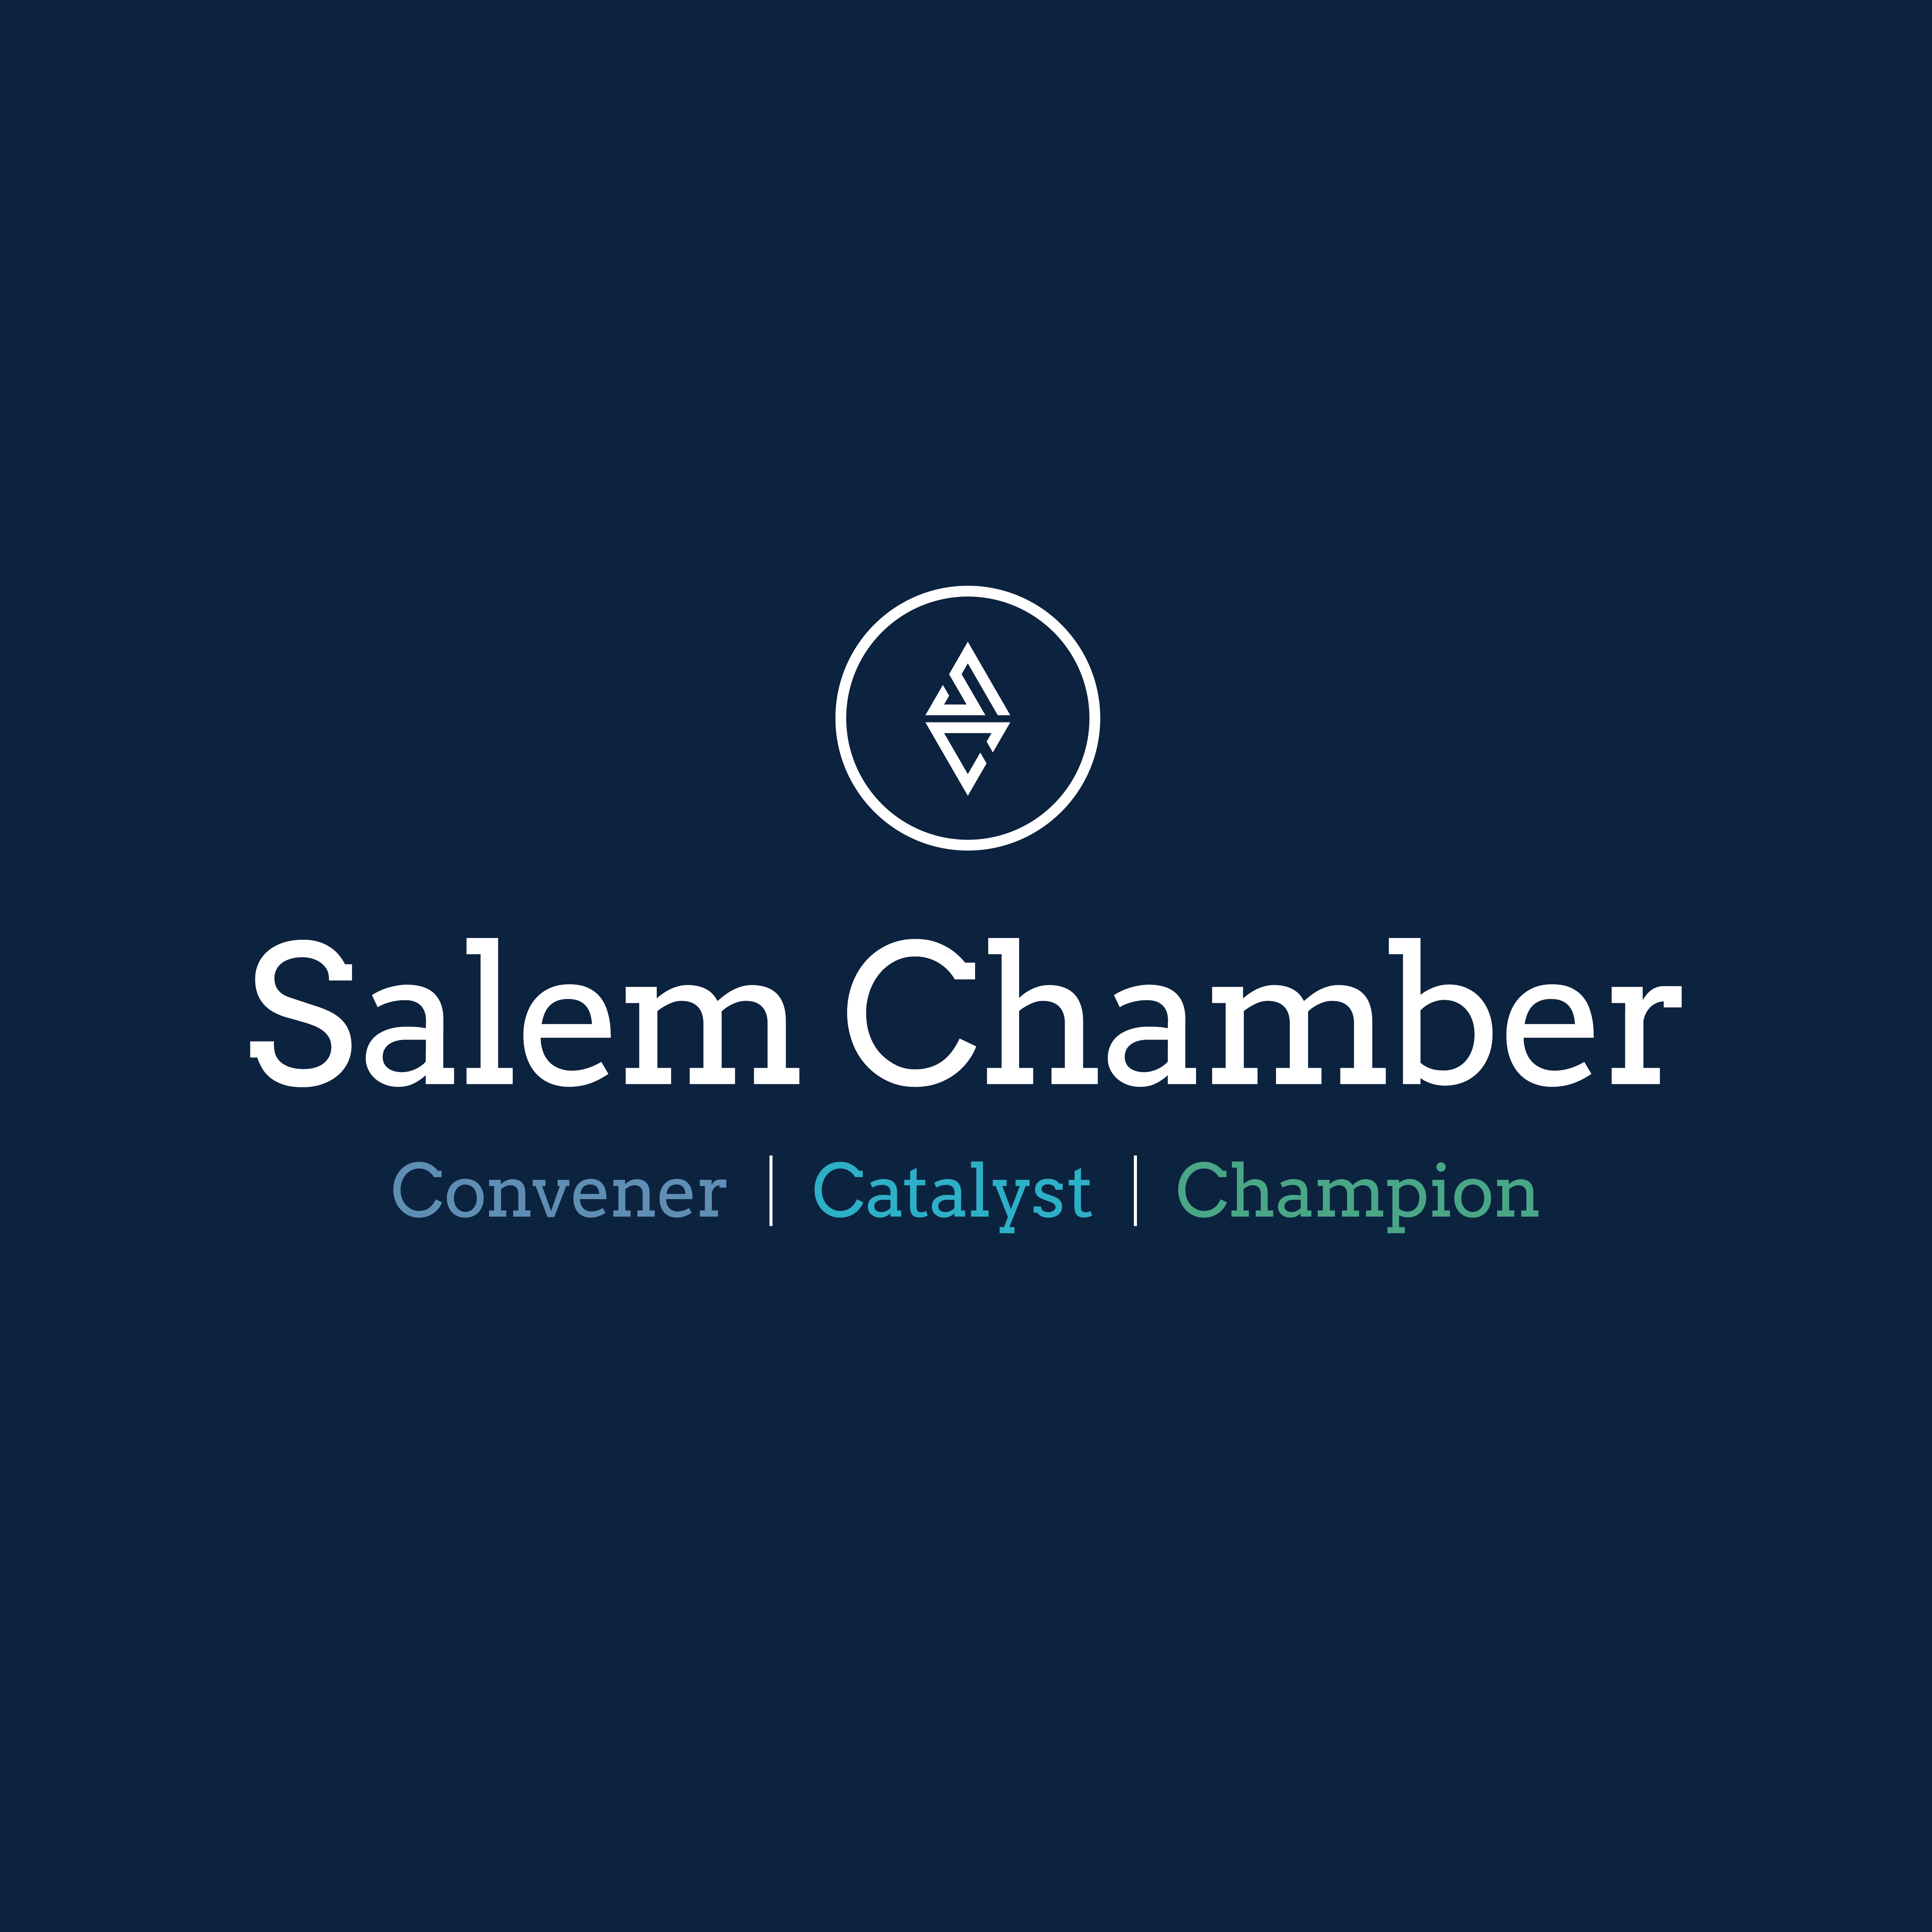 Salem Chamber logo